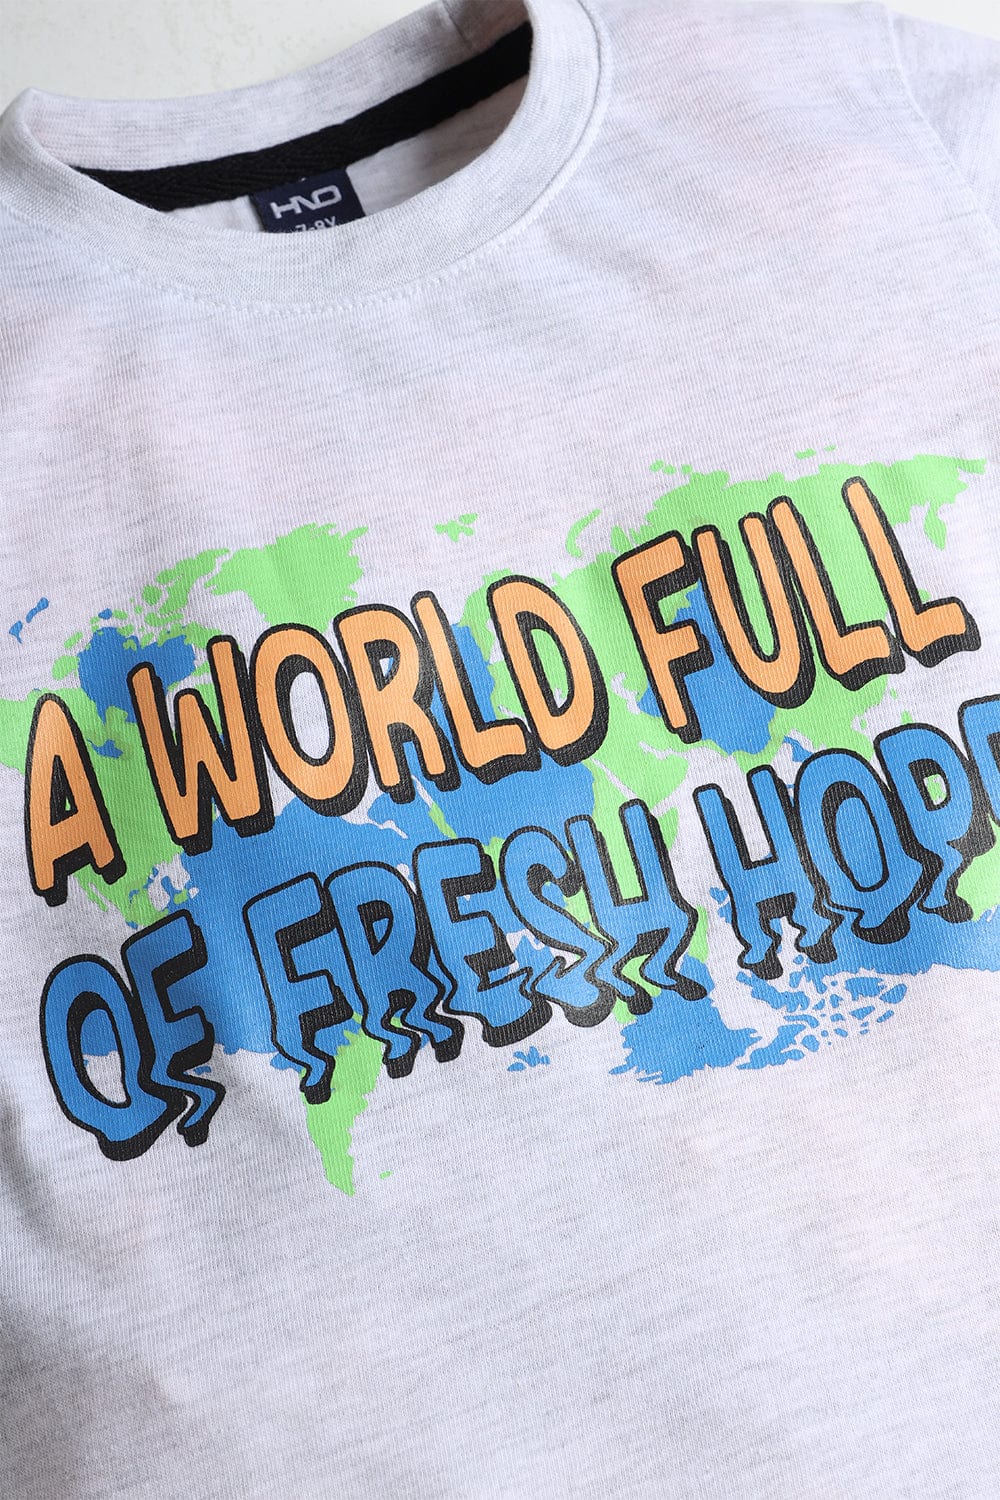 Hope Not Out by Shahid Afridi Boys Knit T-Shirt Boys Fresh Hope Printed T-Shirt